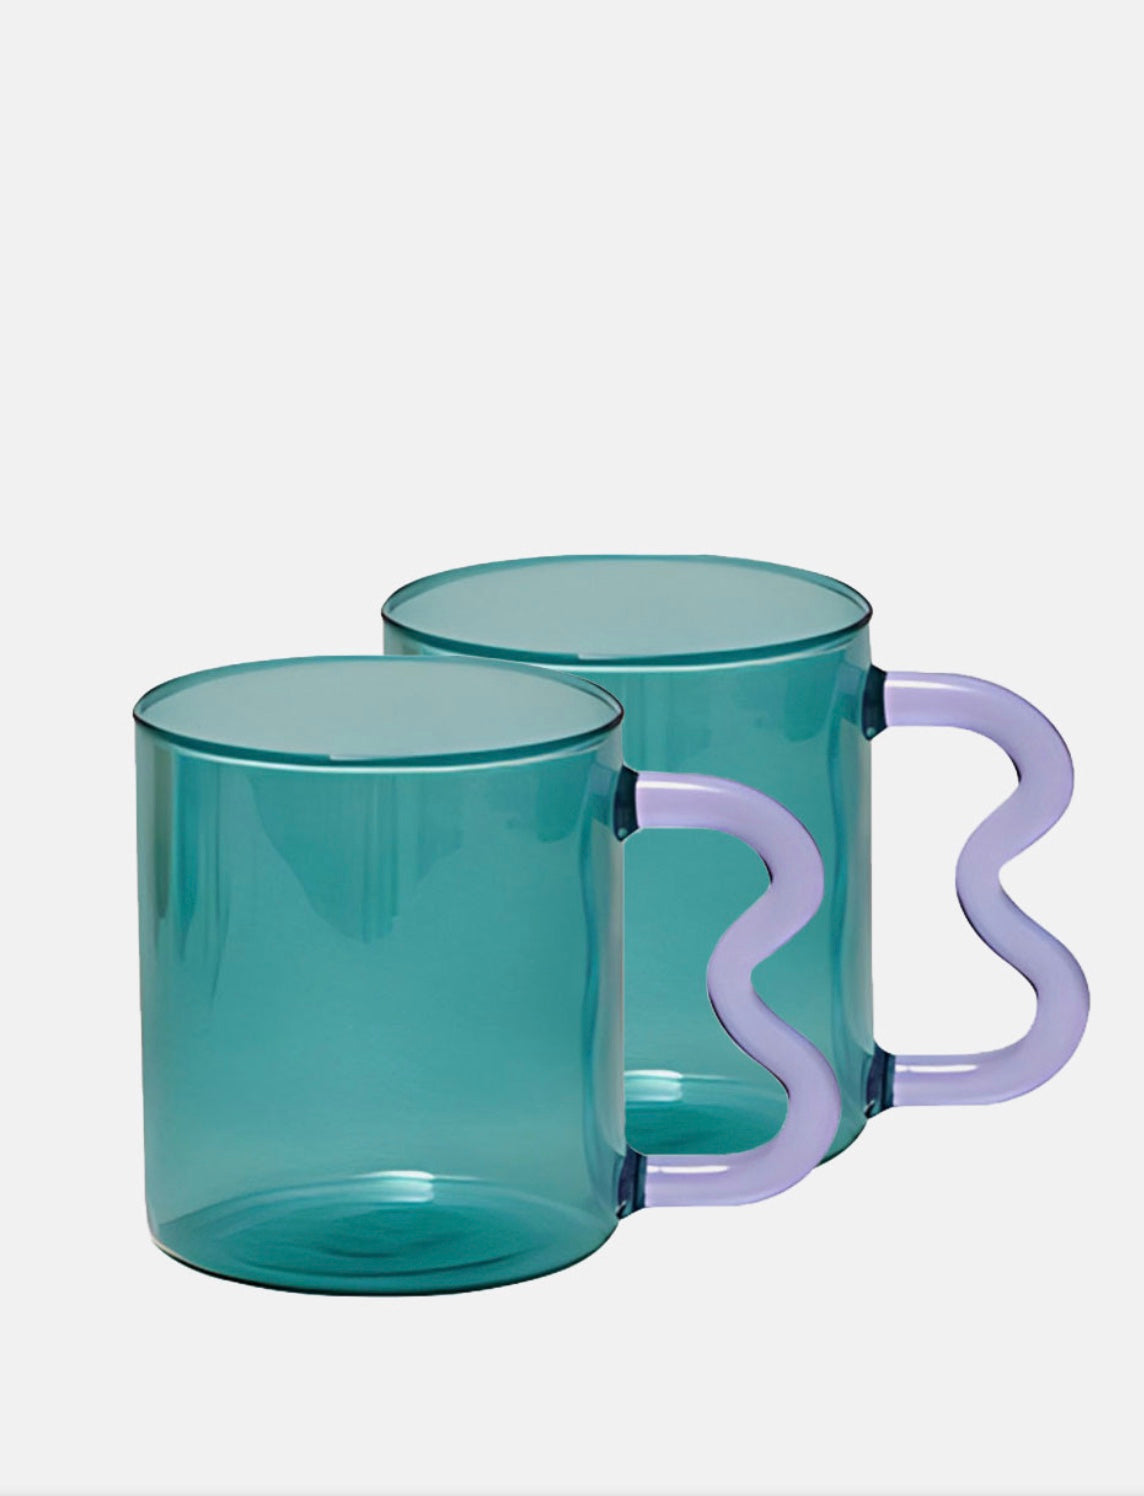 Colourful Glass Mug With Wavy Handle "Boonbon" Turquise & Purple